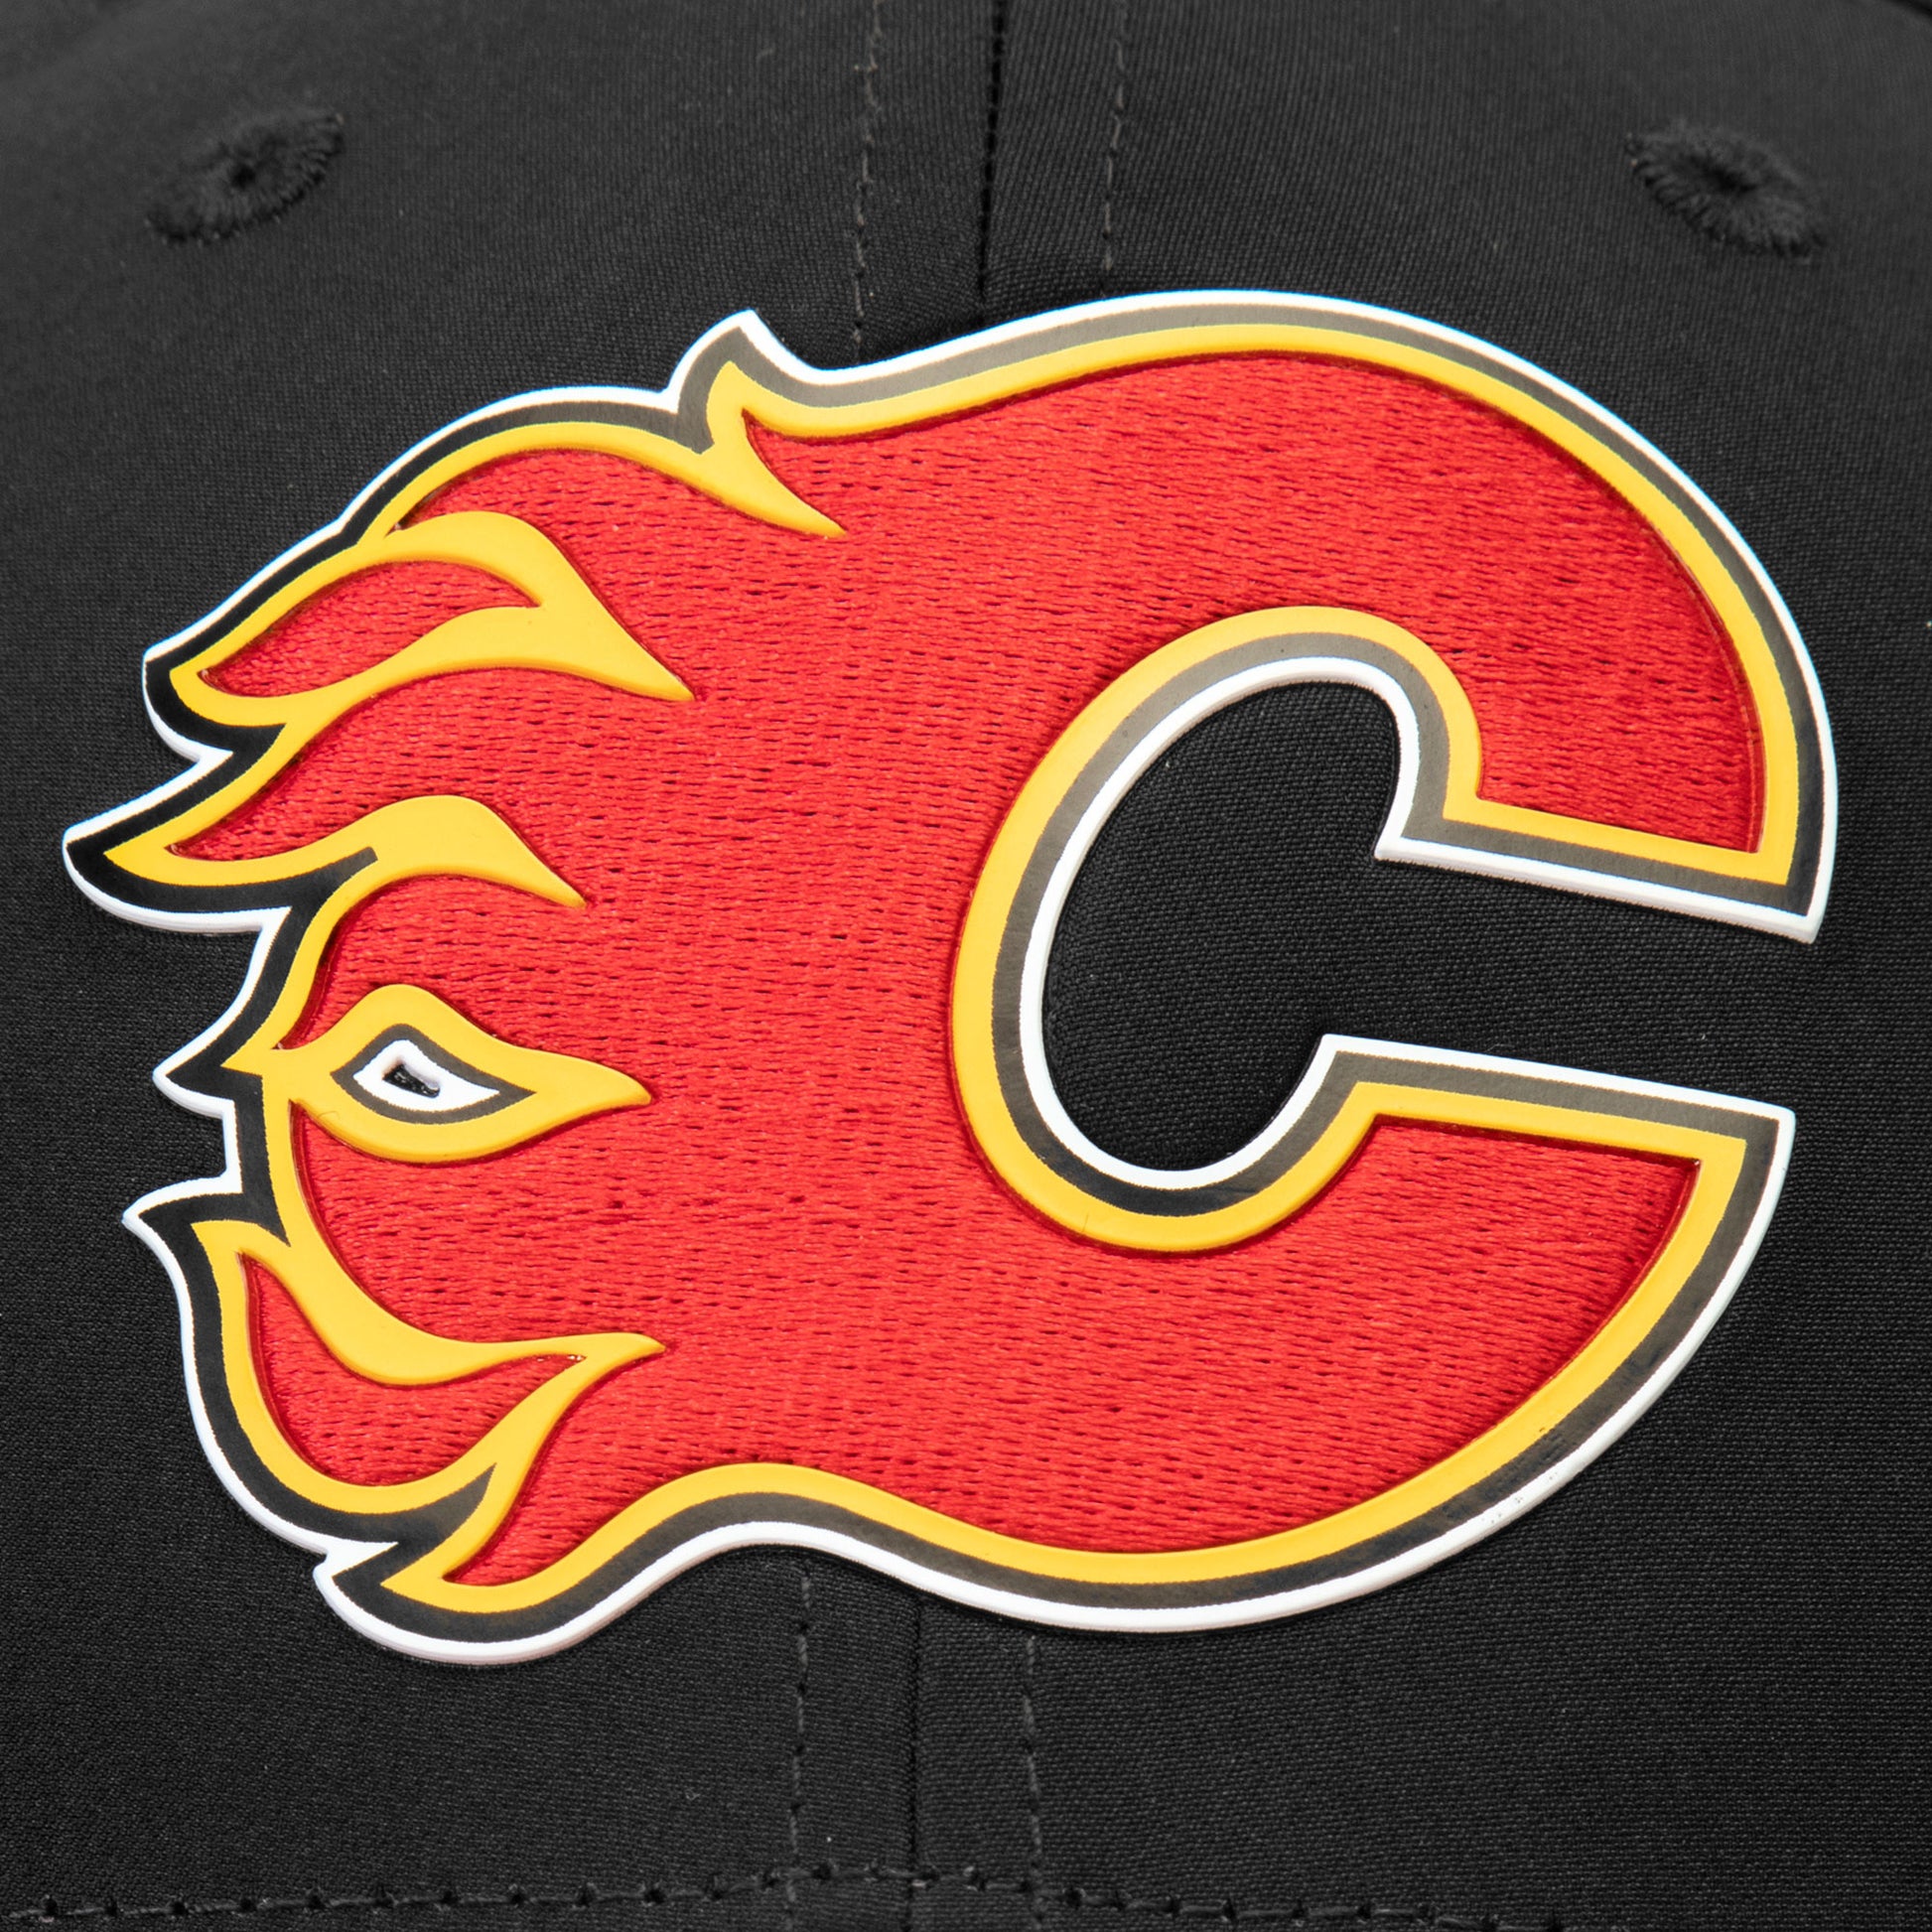 Casquette Flames de Calgary 